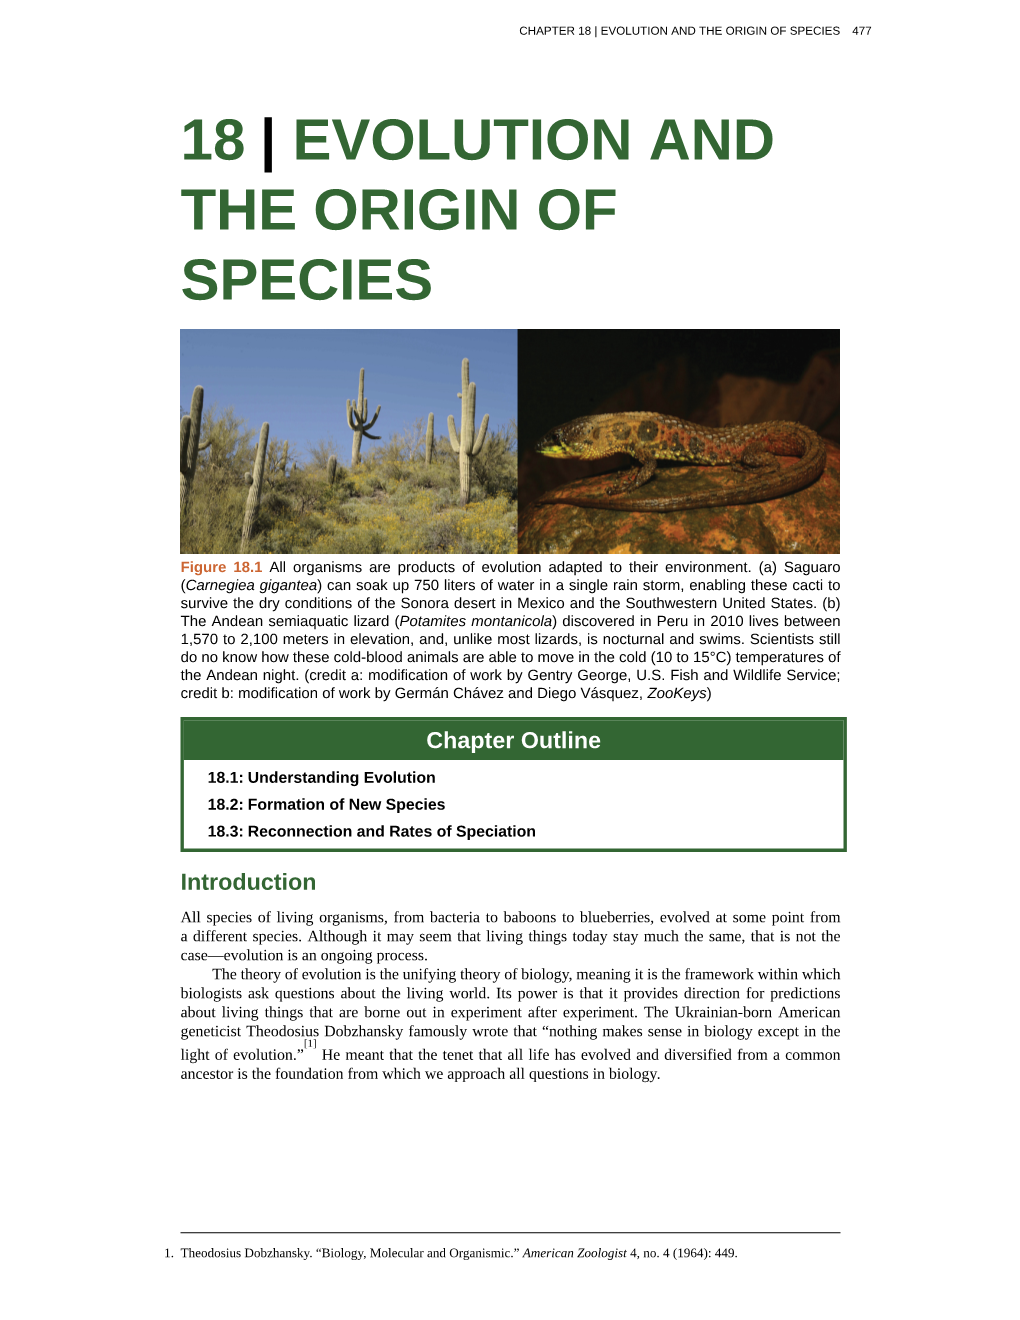 Evolution and the Origin of Species 477